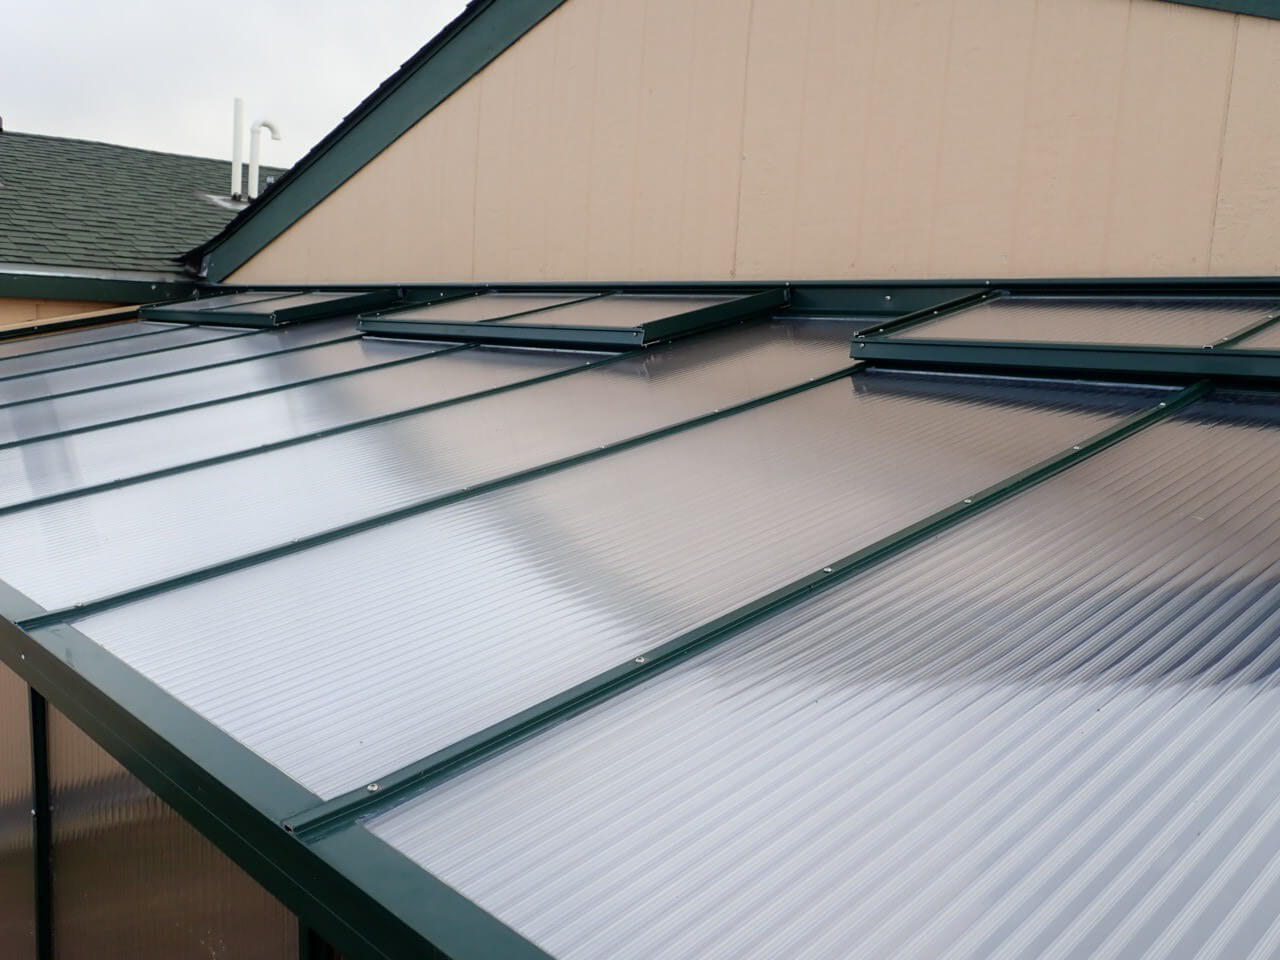 polycarbonate, greenhouses polycarbonate, polycarbonate greenhouse kit, kits, polycarbonate panels